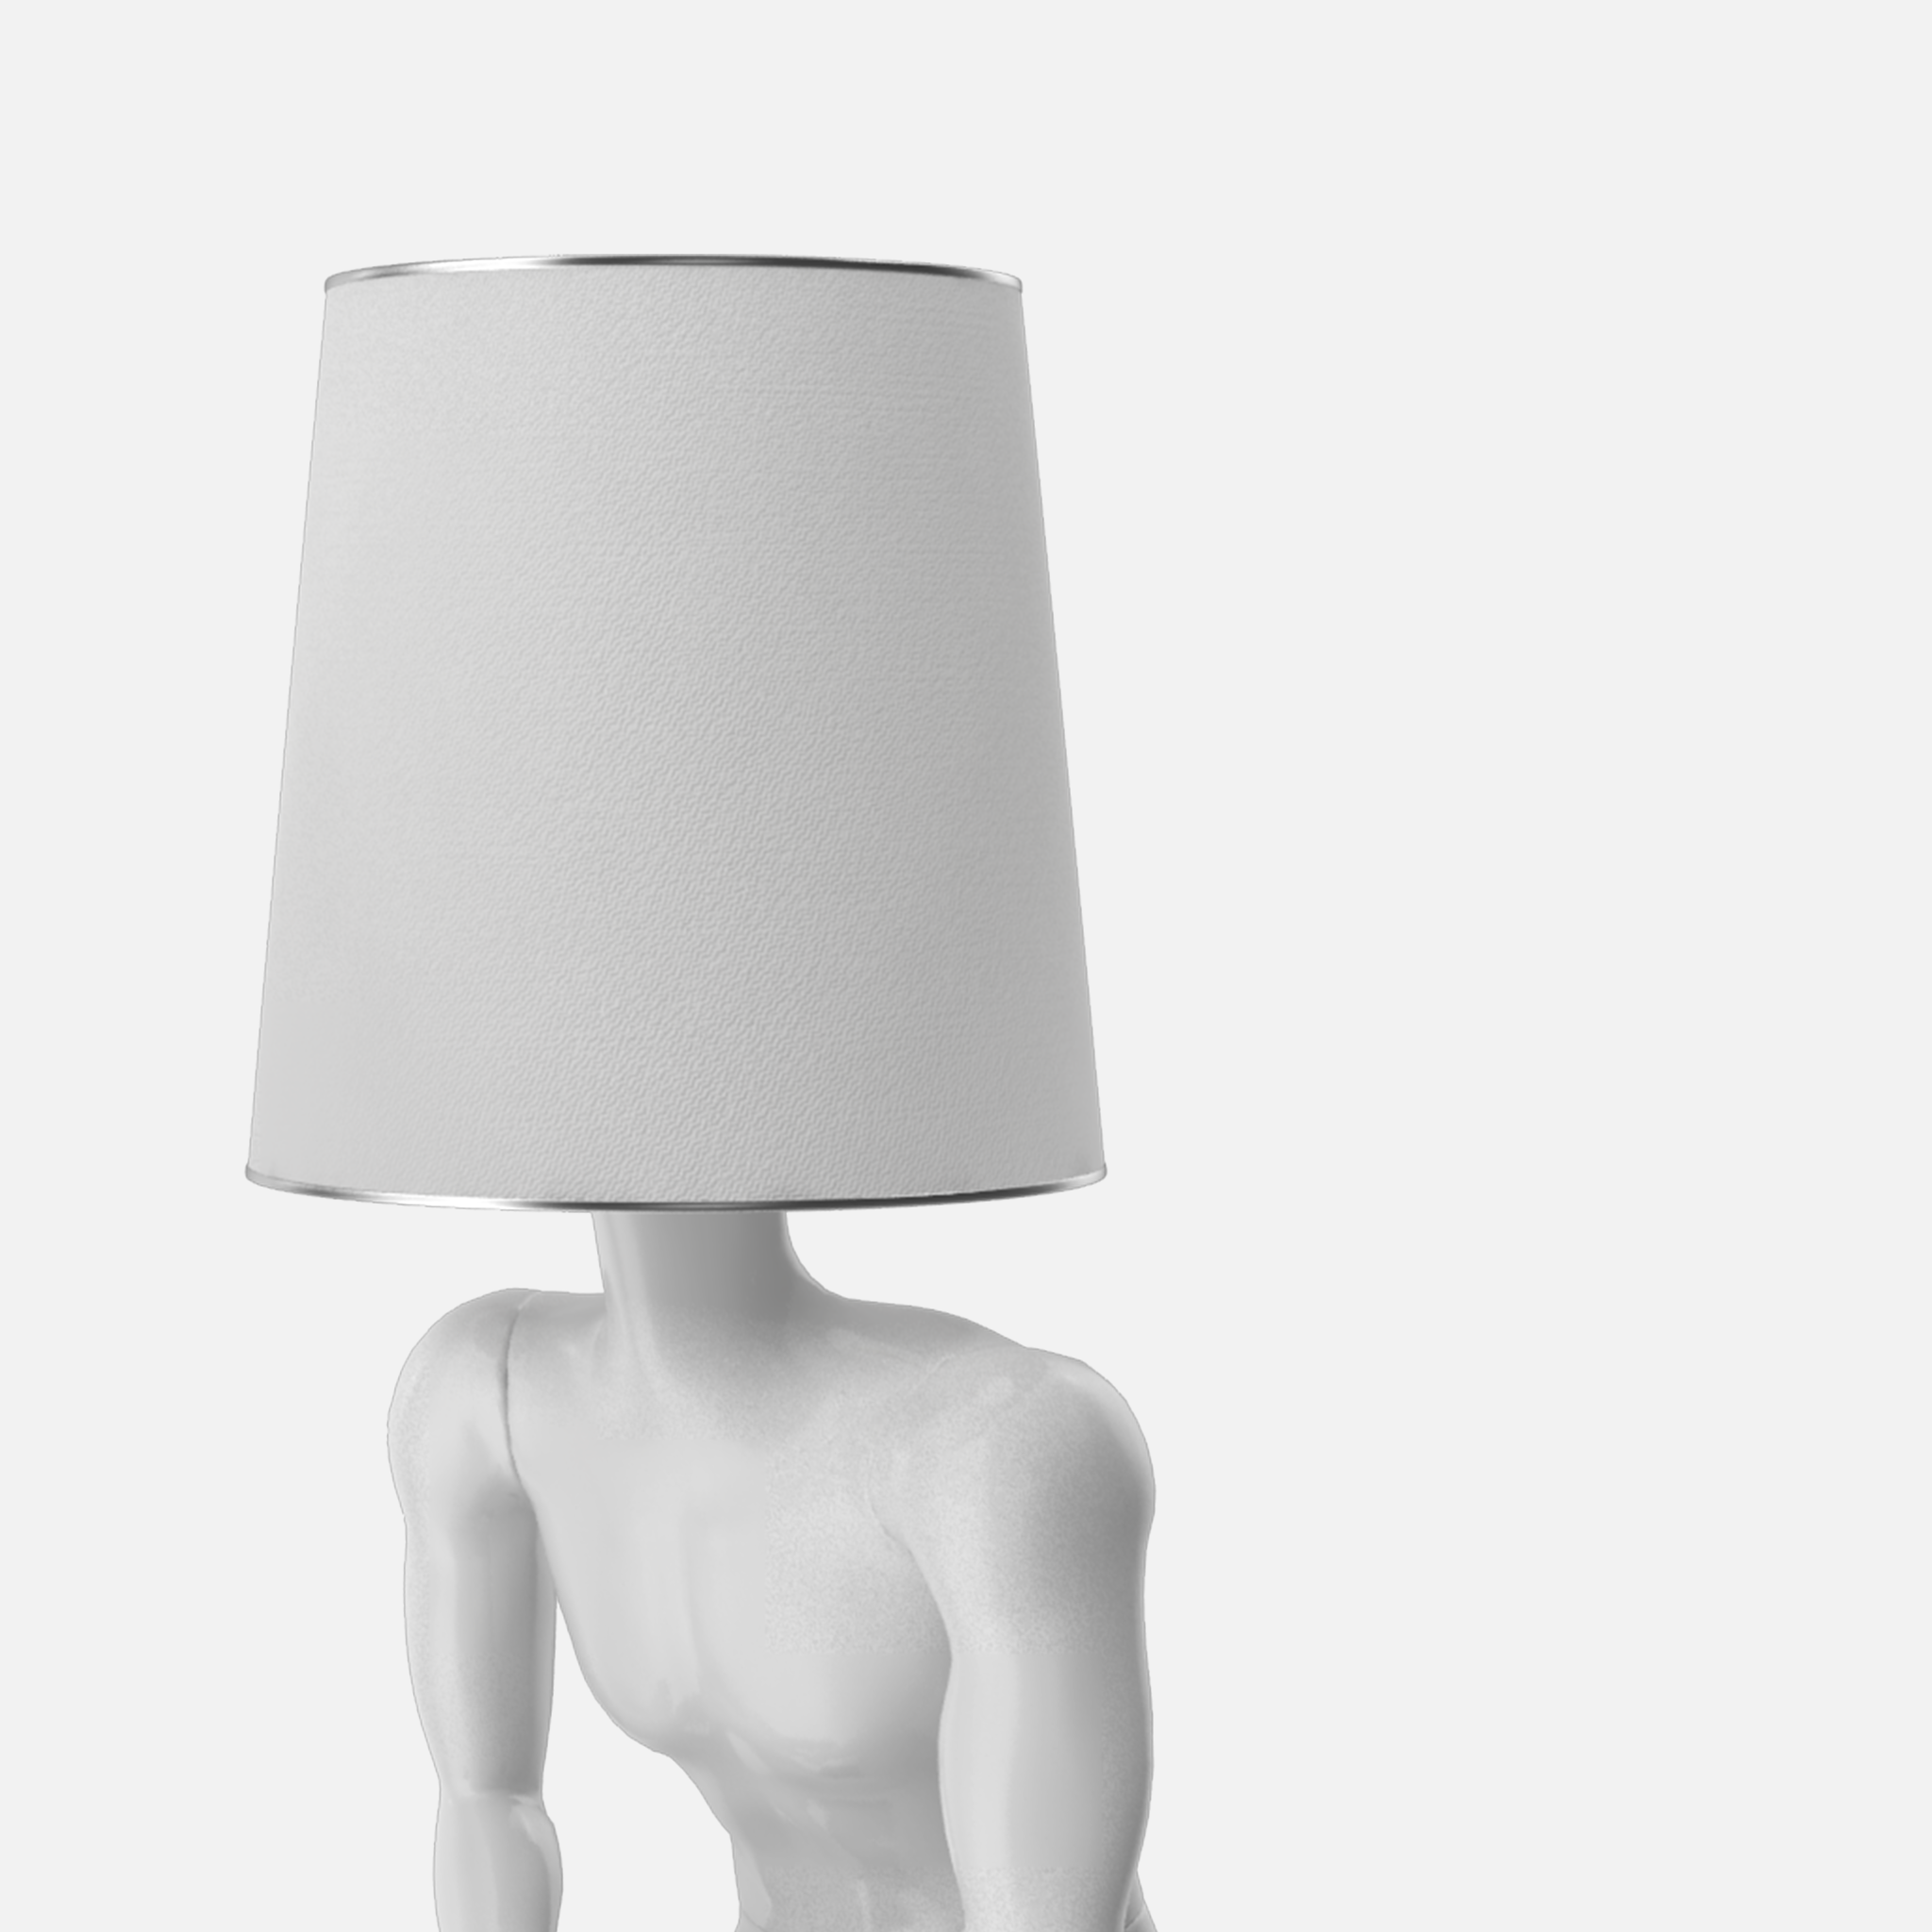 Seated Mannequin Lamp